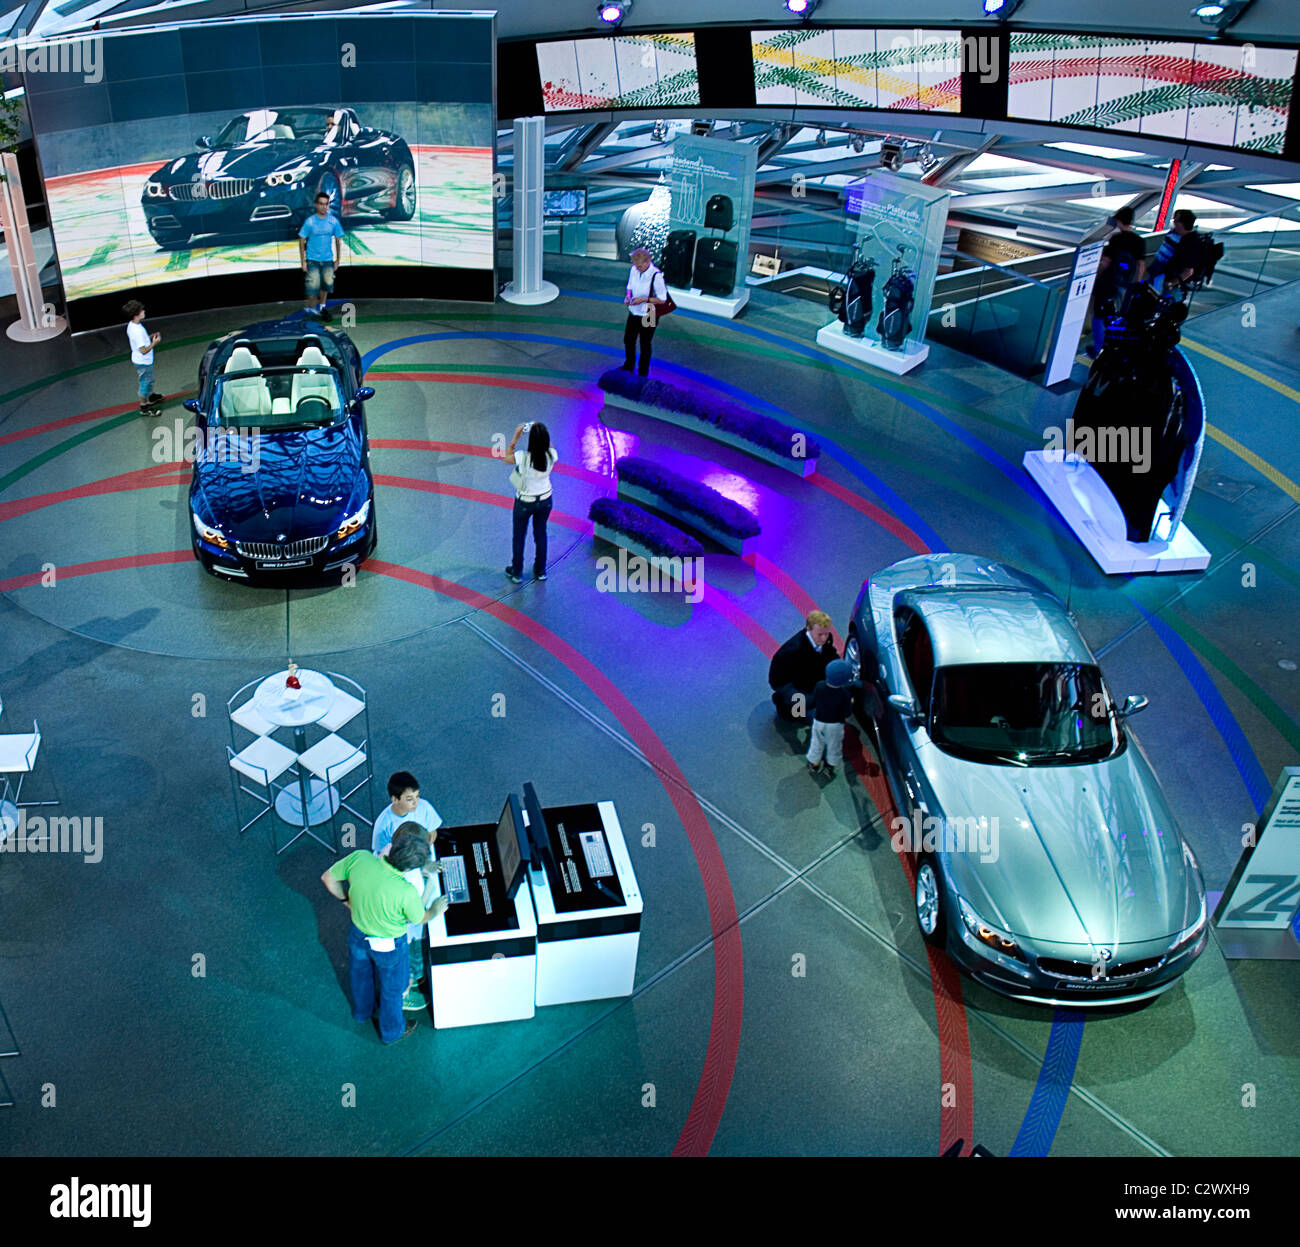 Germany, Bavaria, Munich, BMW World, People in showroom examining new BMW cars. Stock Photo